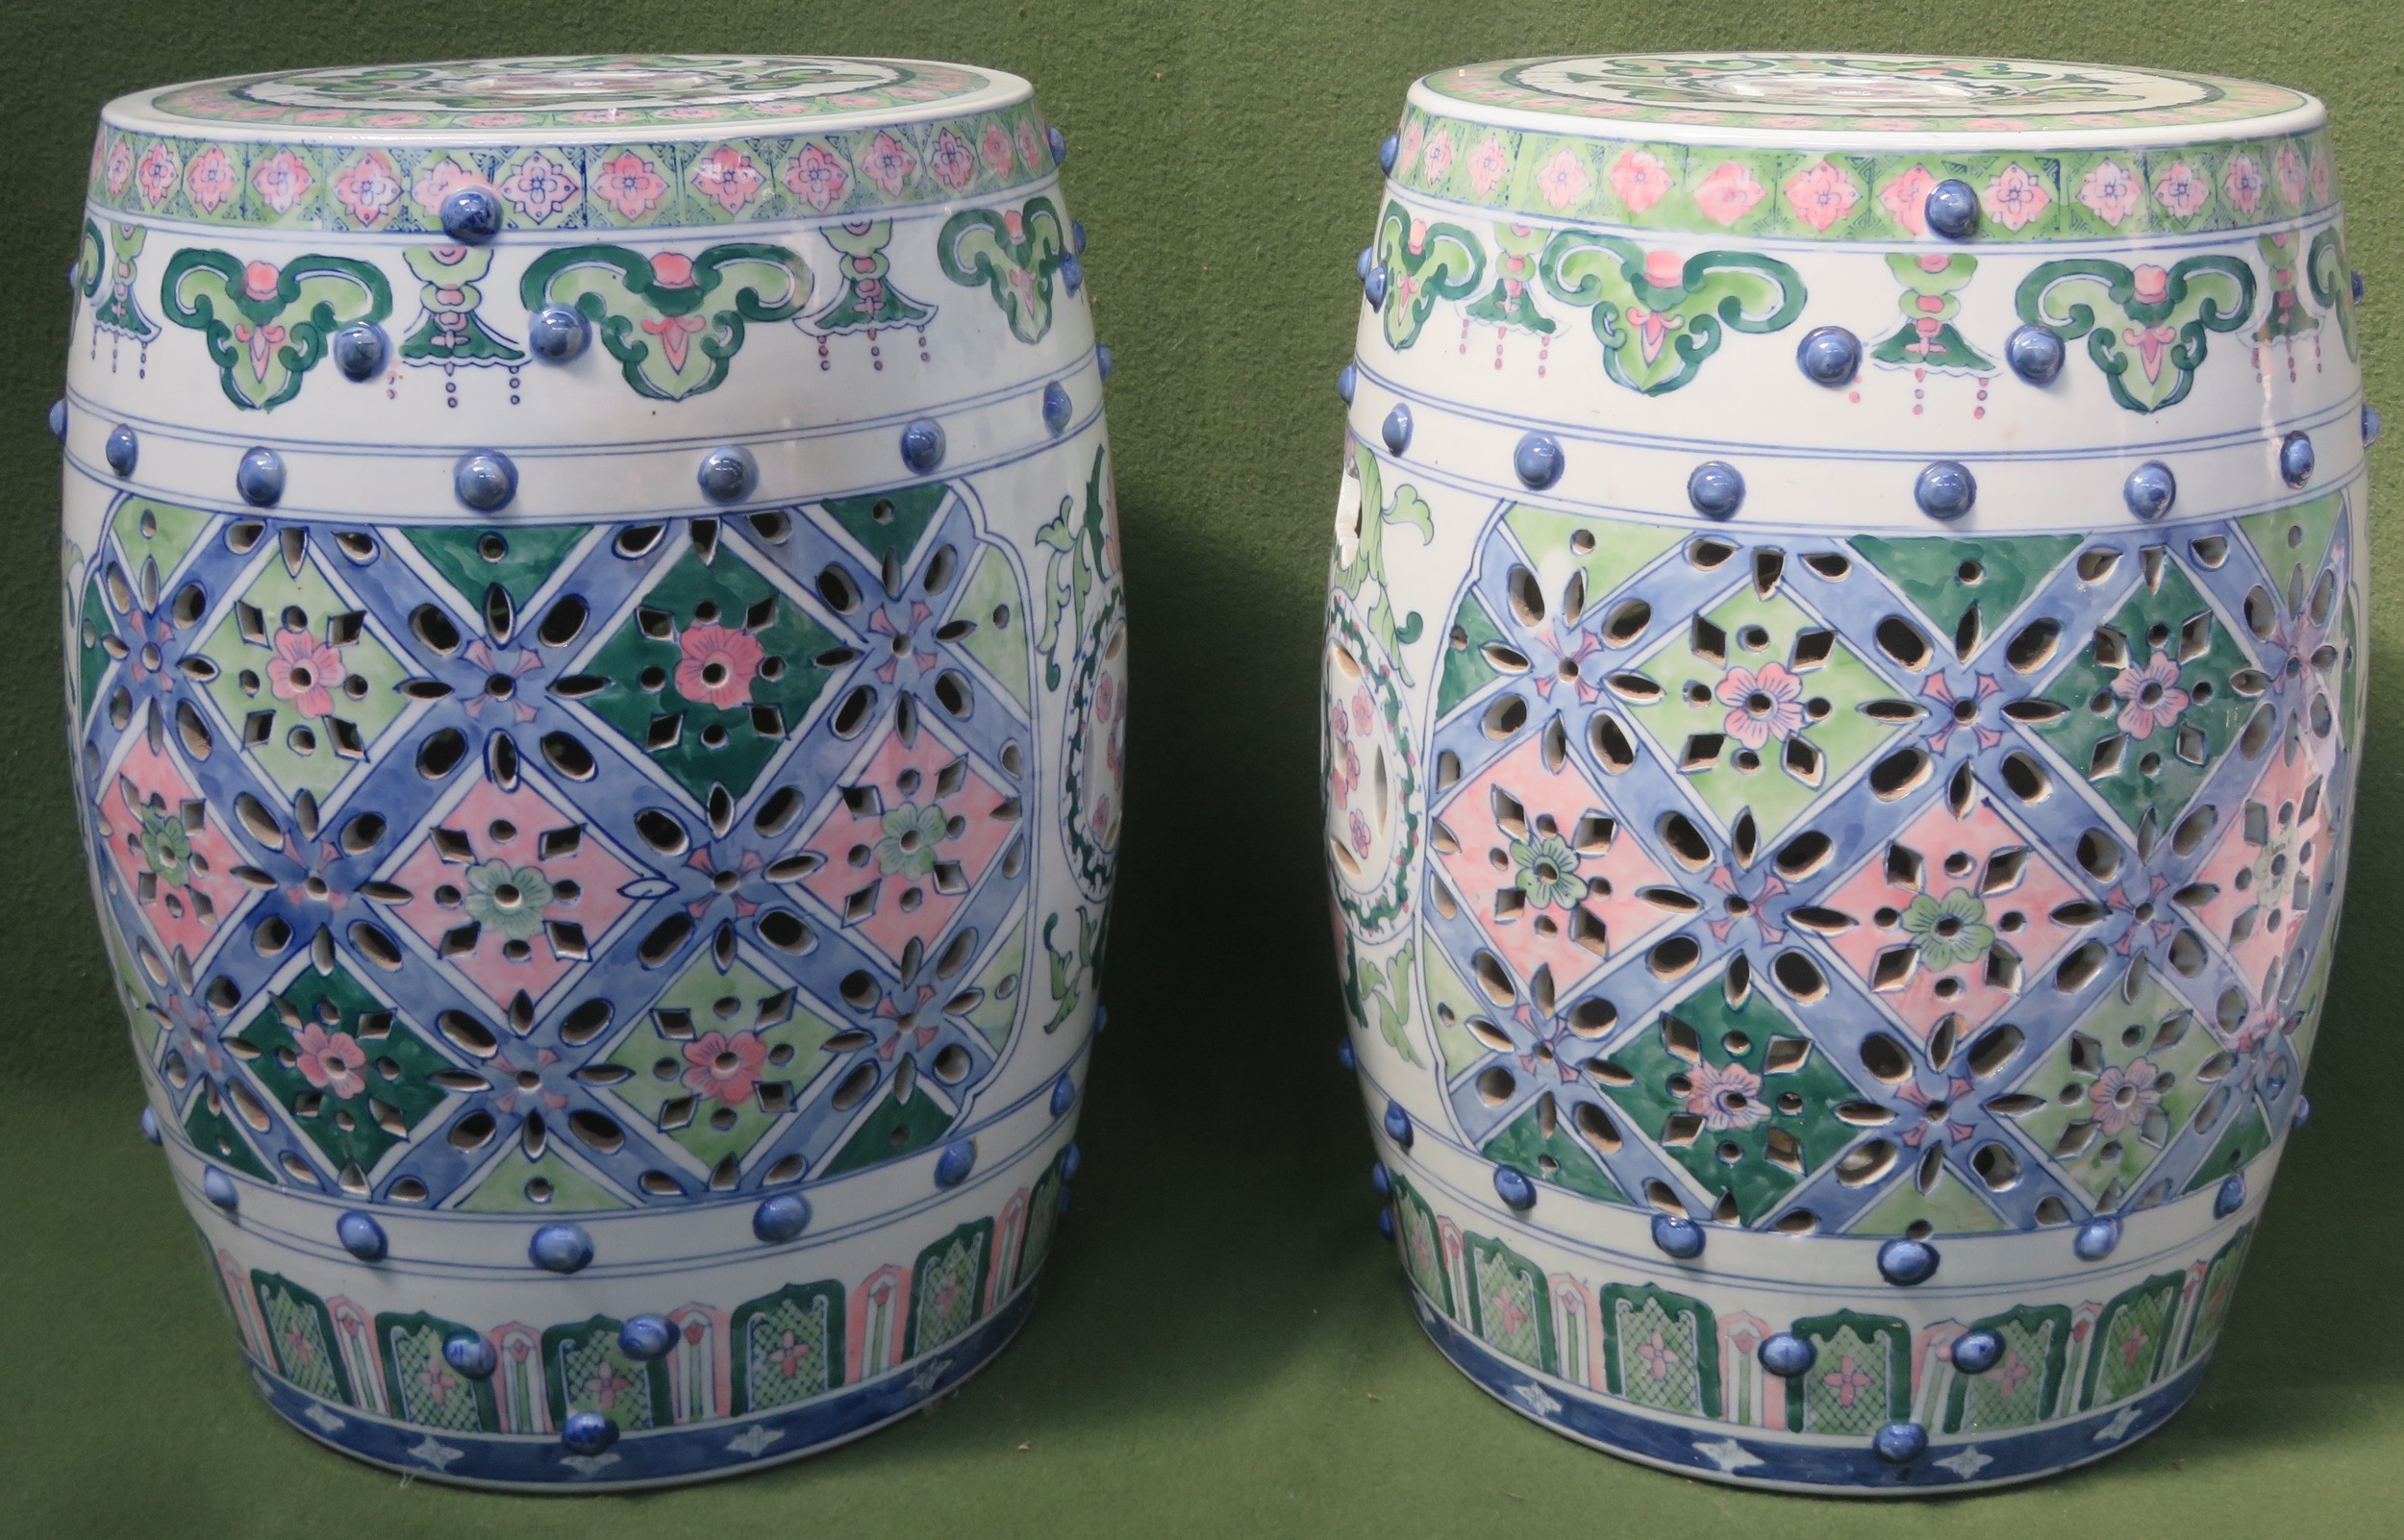 Two similar Oriental handpainted and piercework decorated ceramic barrel form window seats.